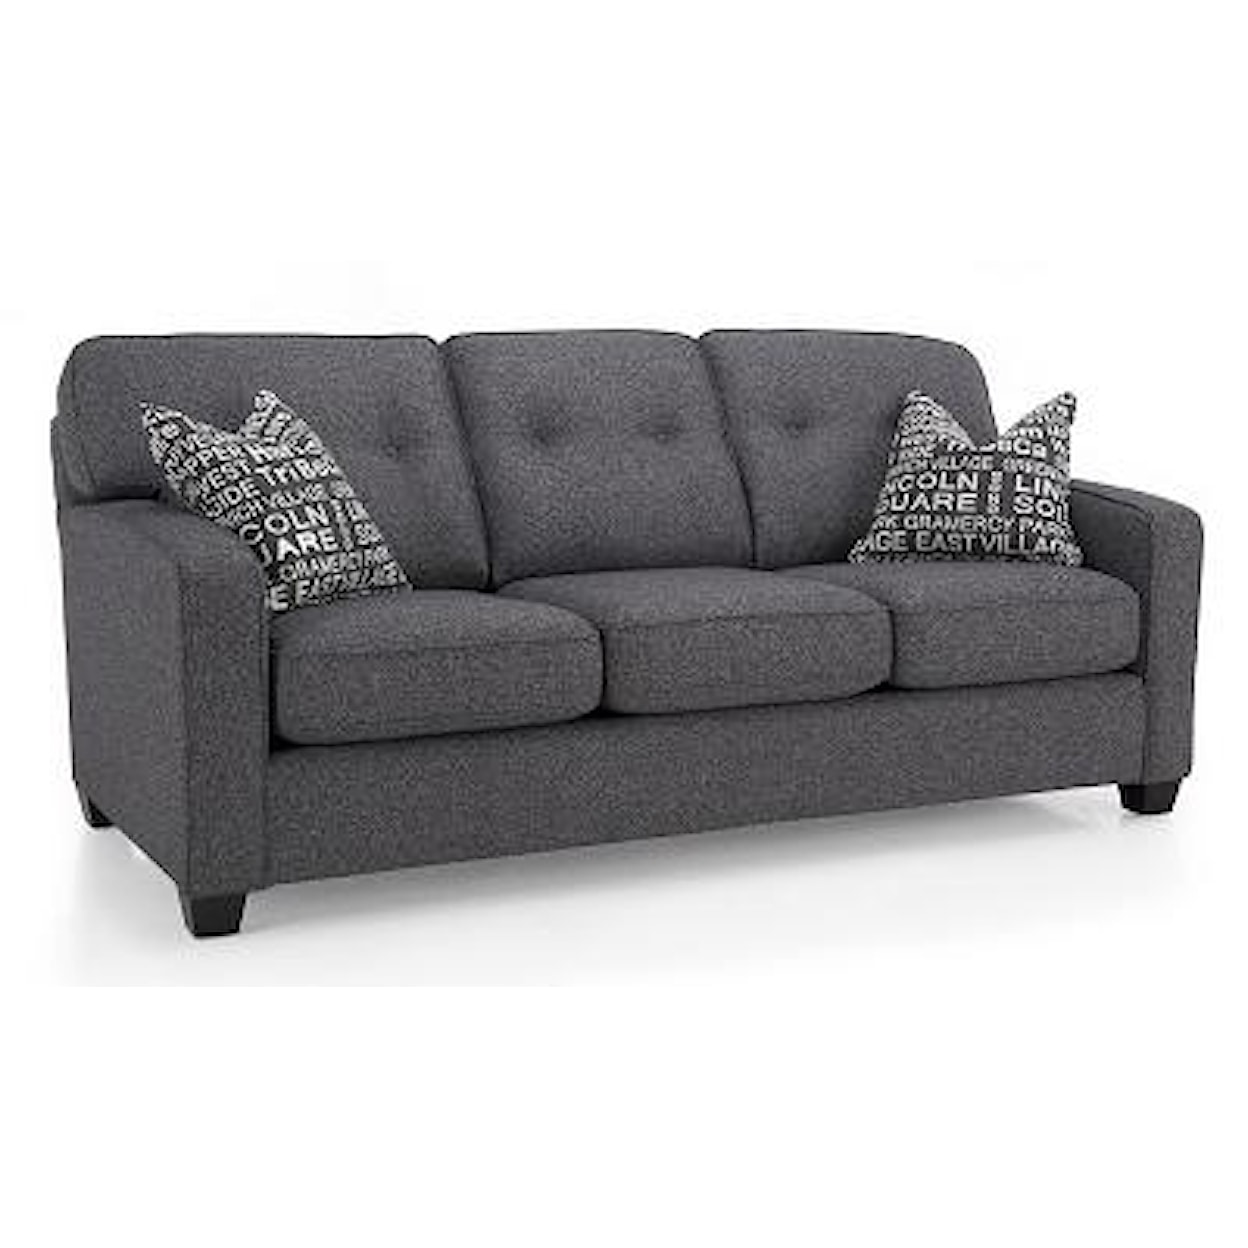 Decor-Rest 2298 Series Sofa